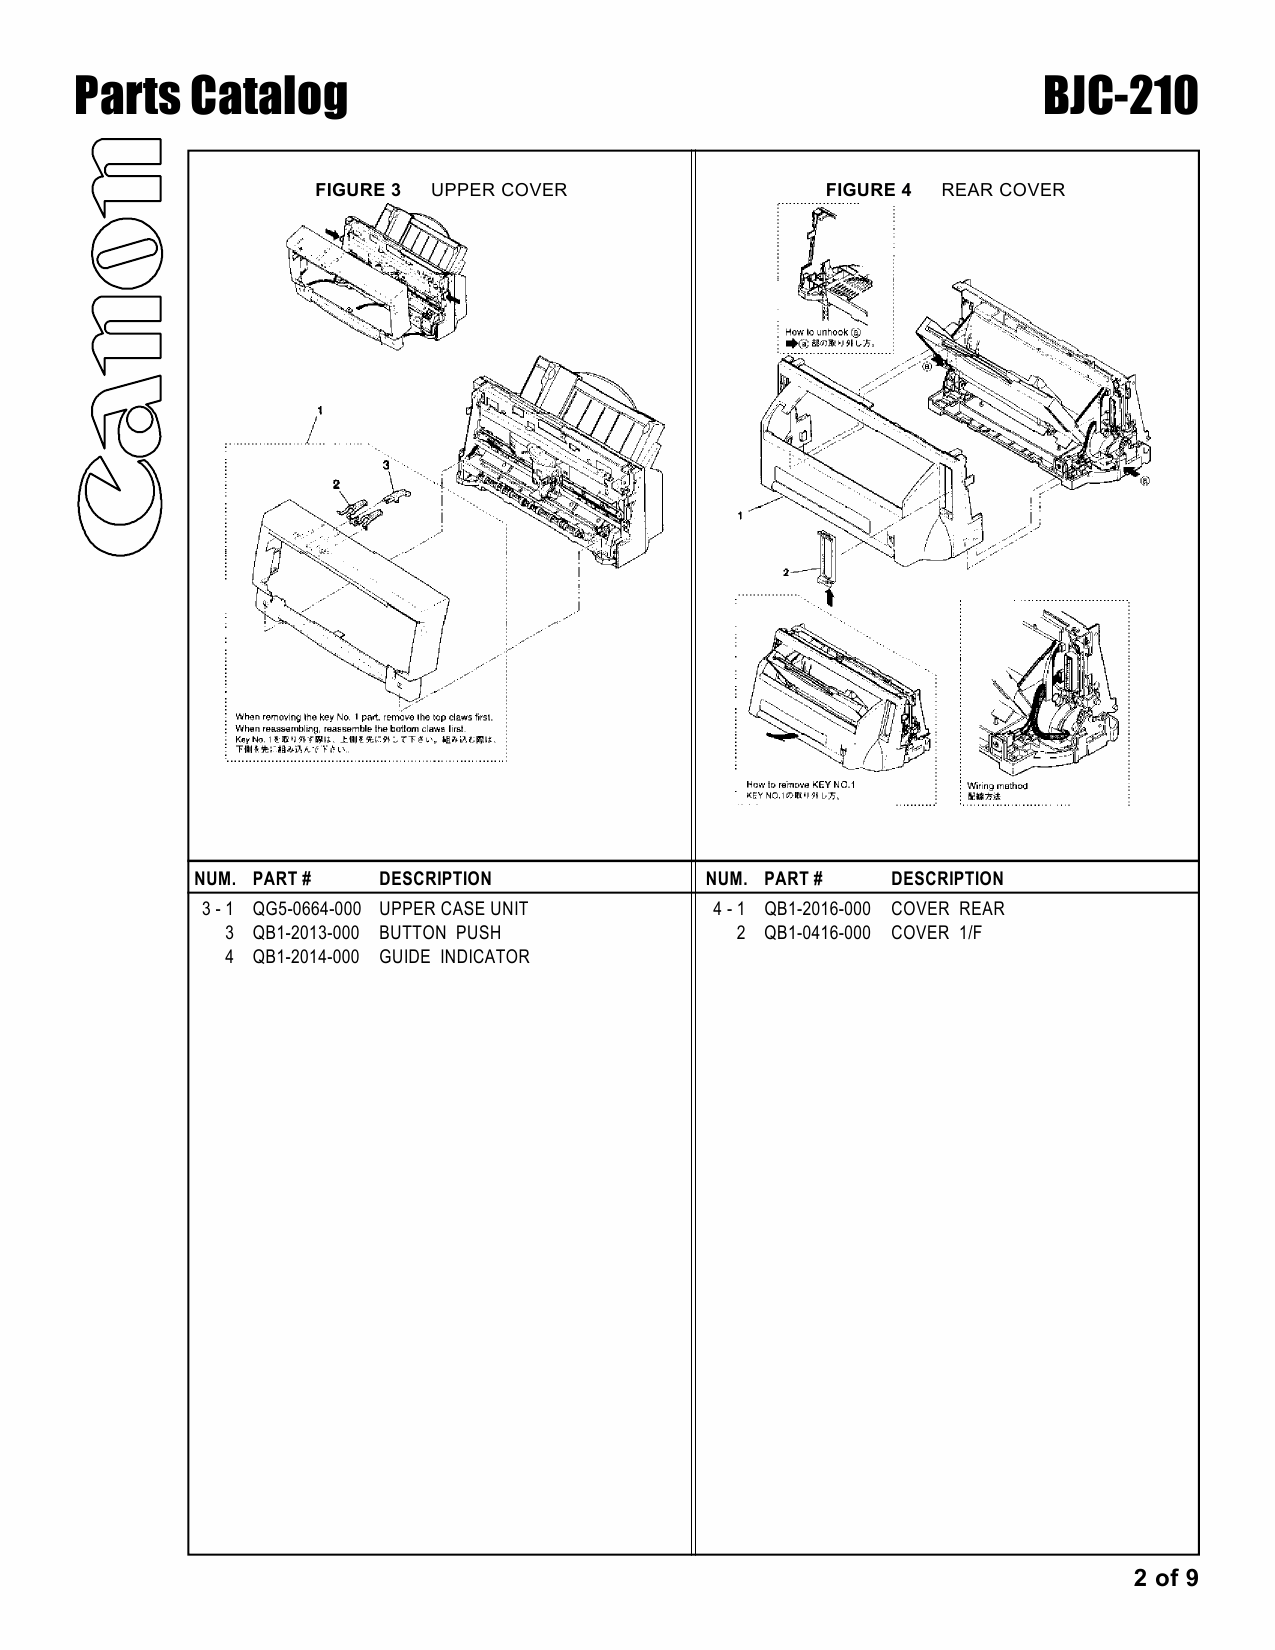 Canon BubbleJet BJC-210 Parts Catalog Manual-2